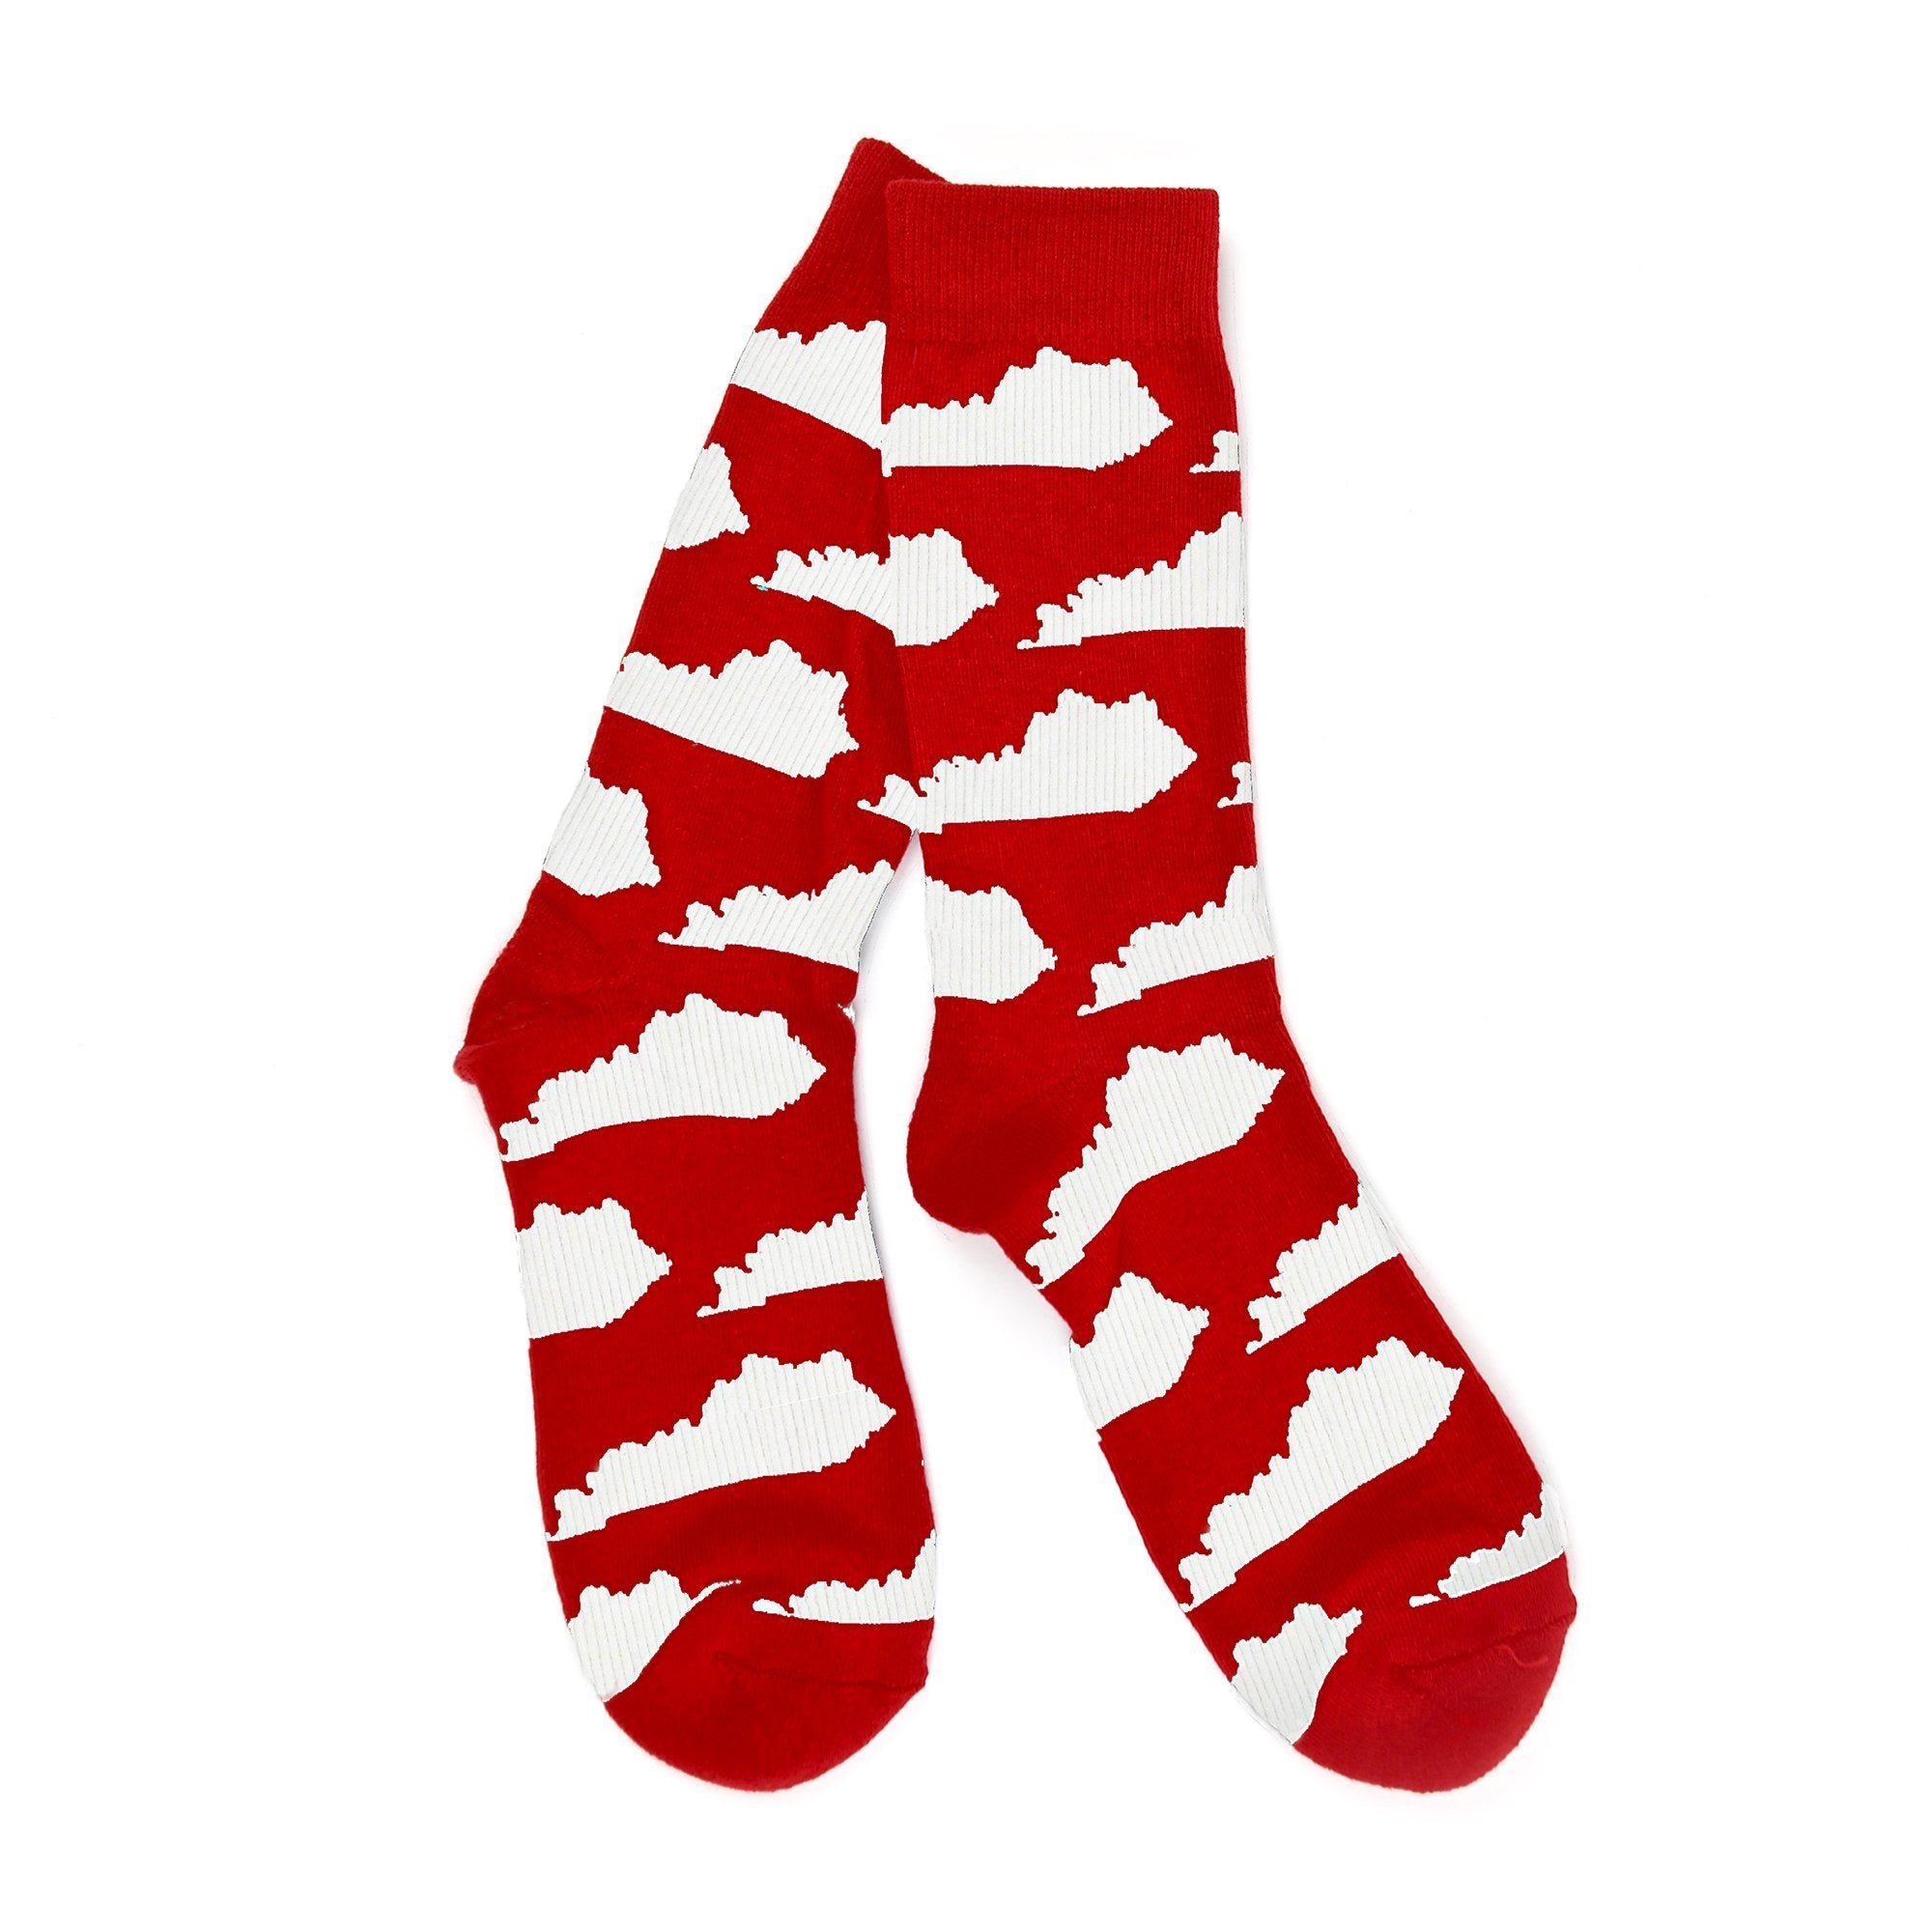 KY Shape Socks (Red and White)-socks-Southern Socks